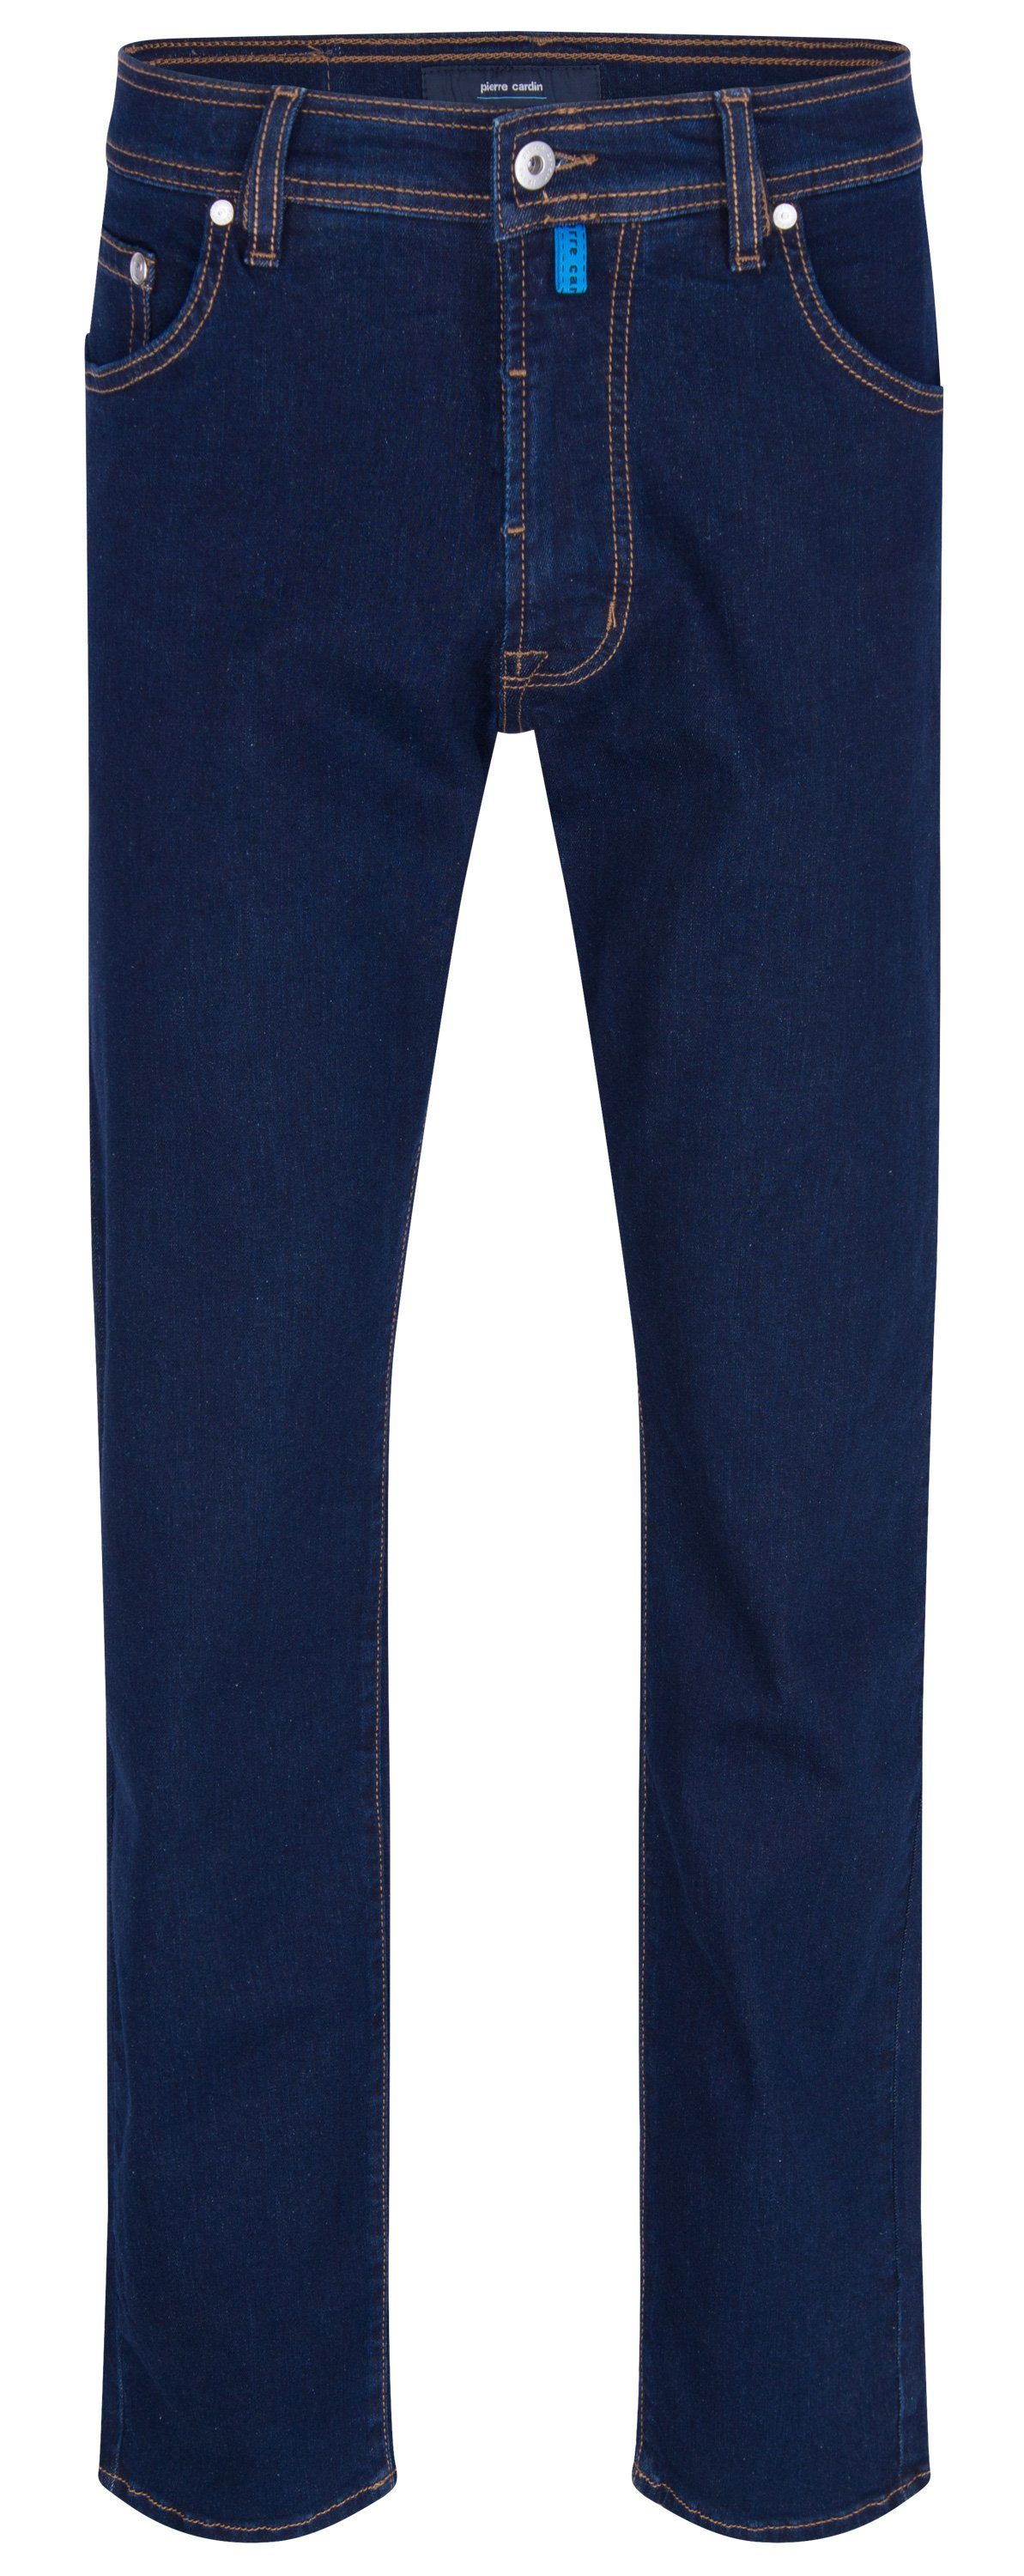 Pierre Cardin 5-Pocket-Jeans PIERRE CARDIN DEAUVILLE dark blue stonewash 31960 7106.6811 - CLIMA | Straight-Fit Jeans